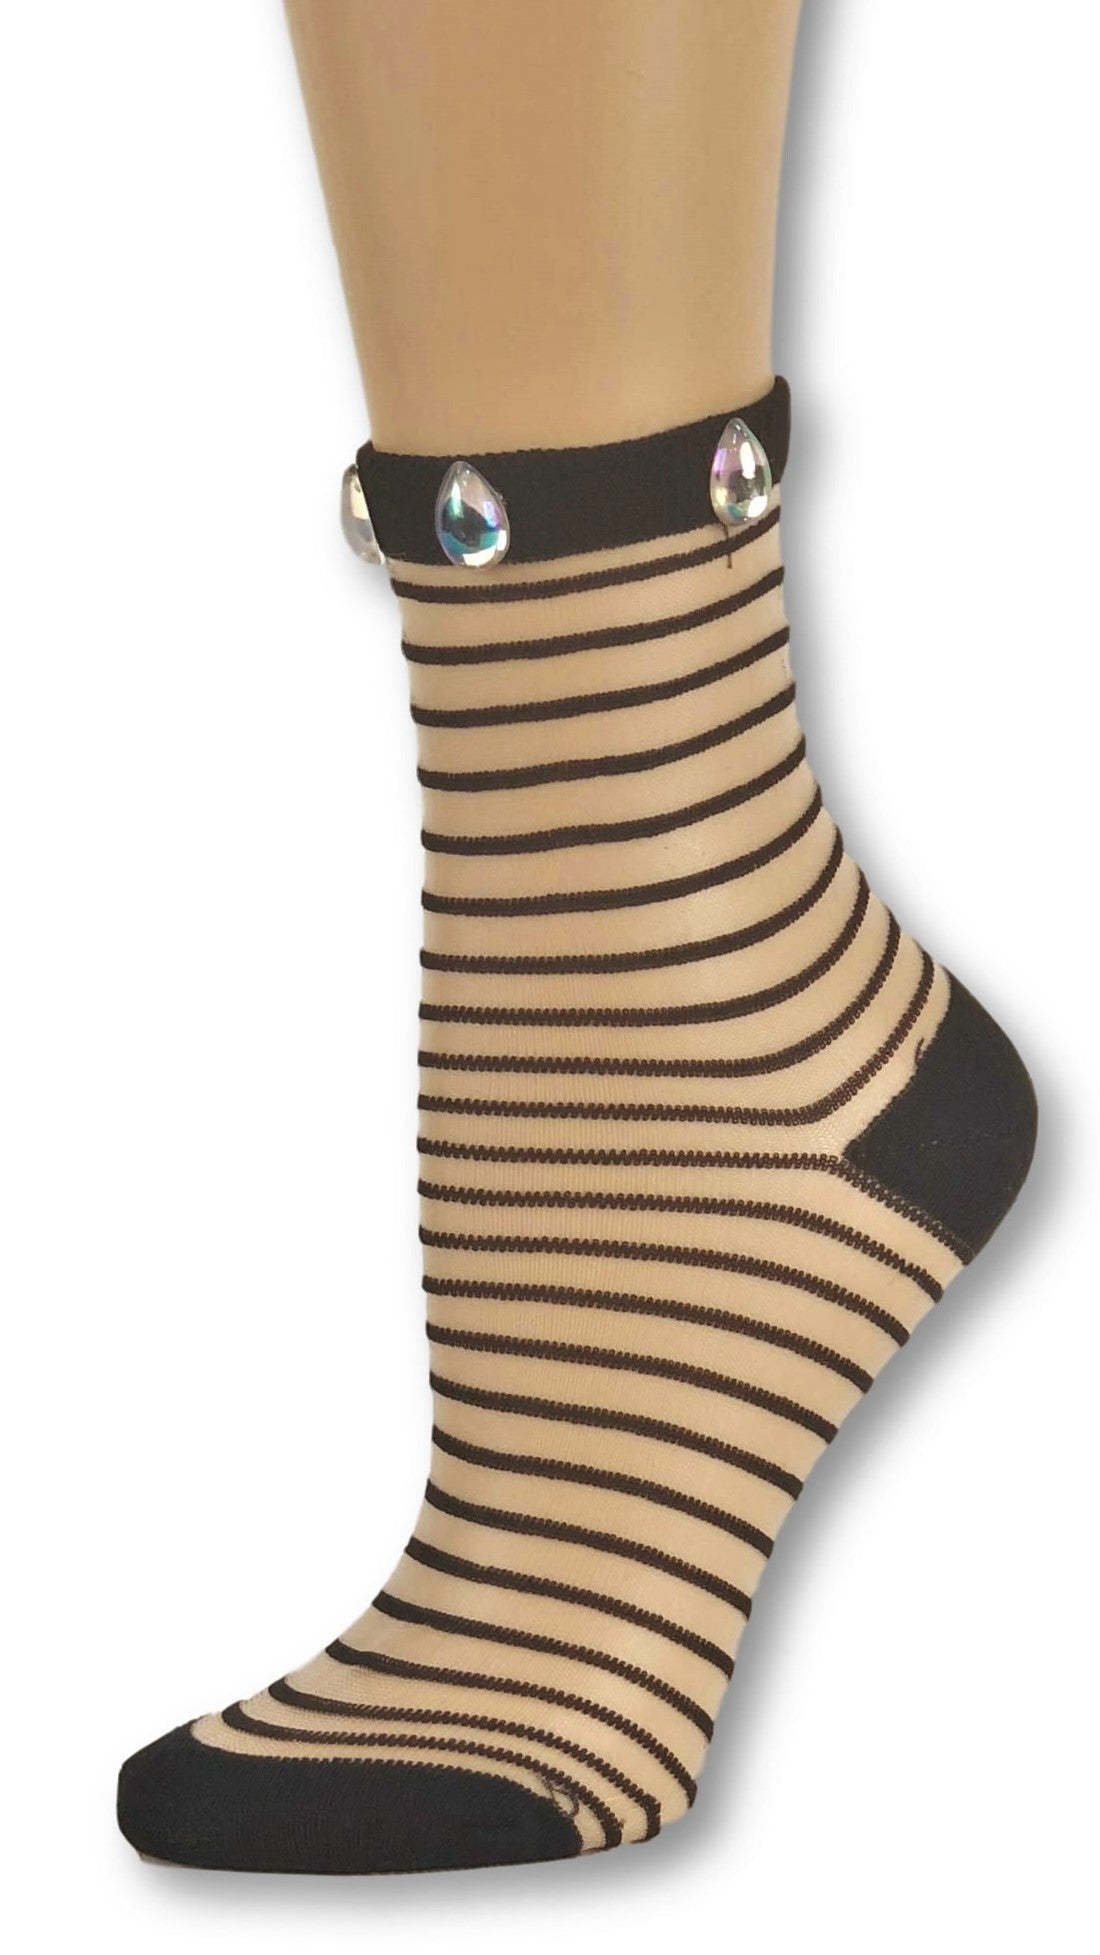 Black Striped Custom Sheer Socks with beads - Global Trendz Fashion®